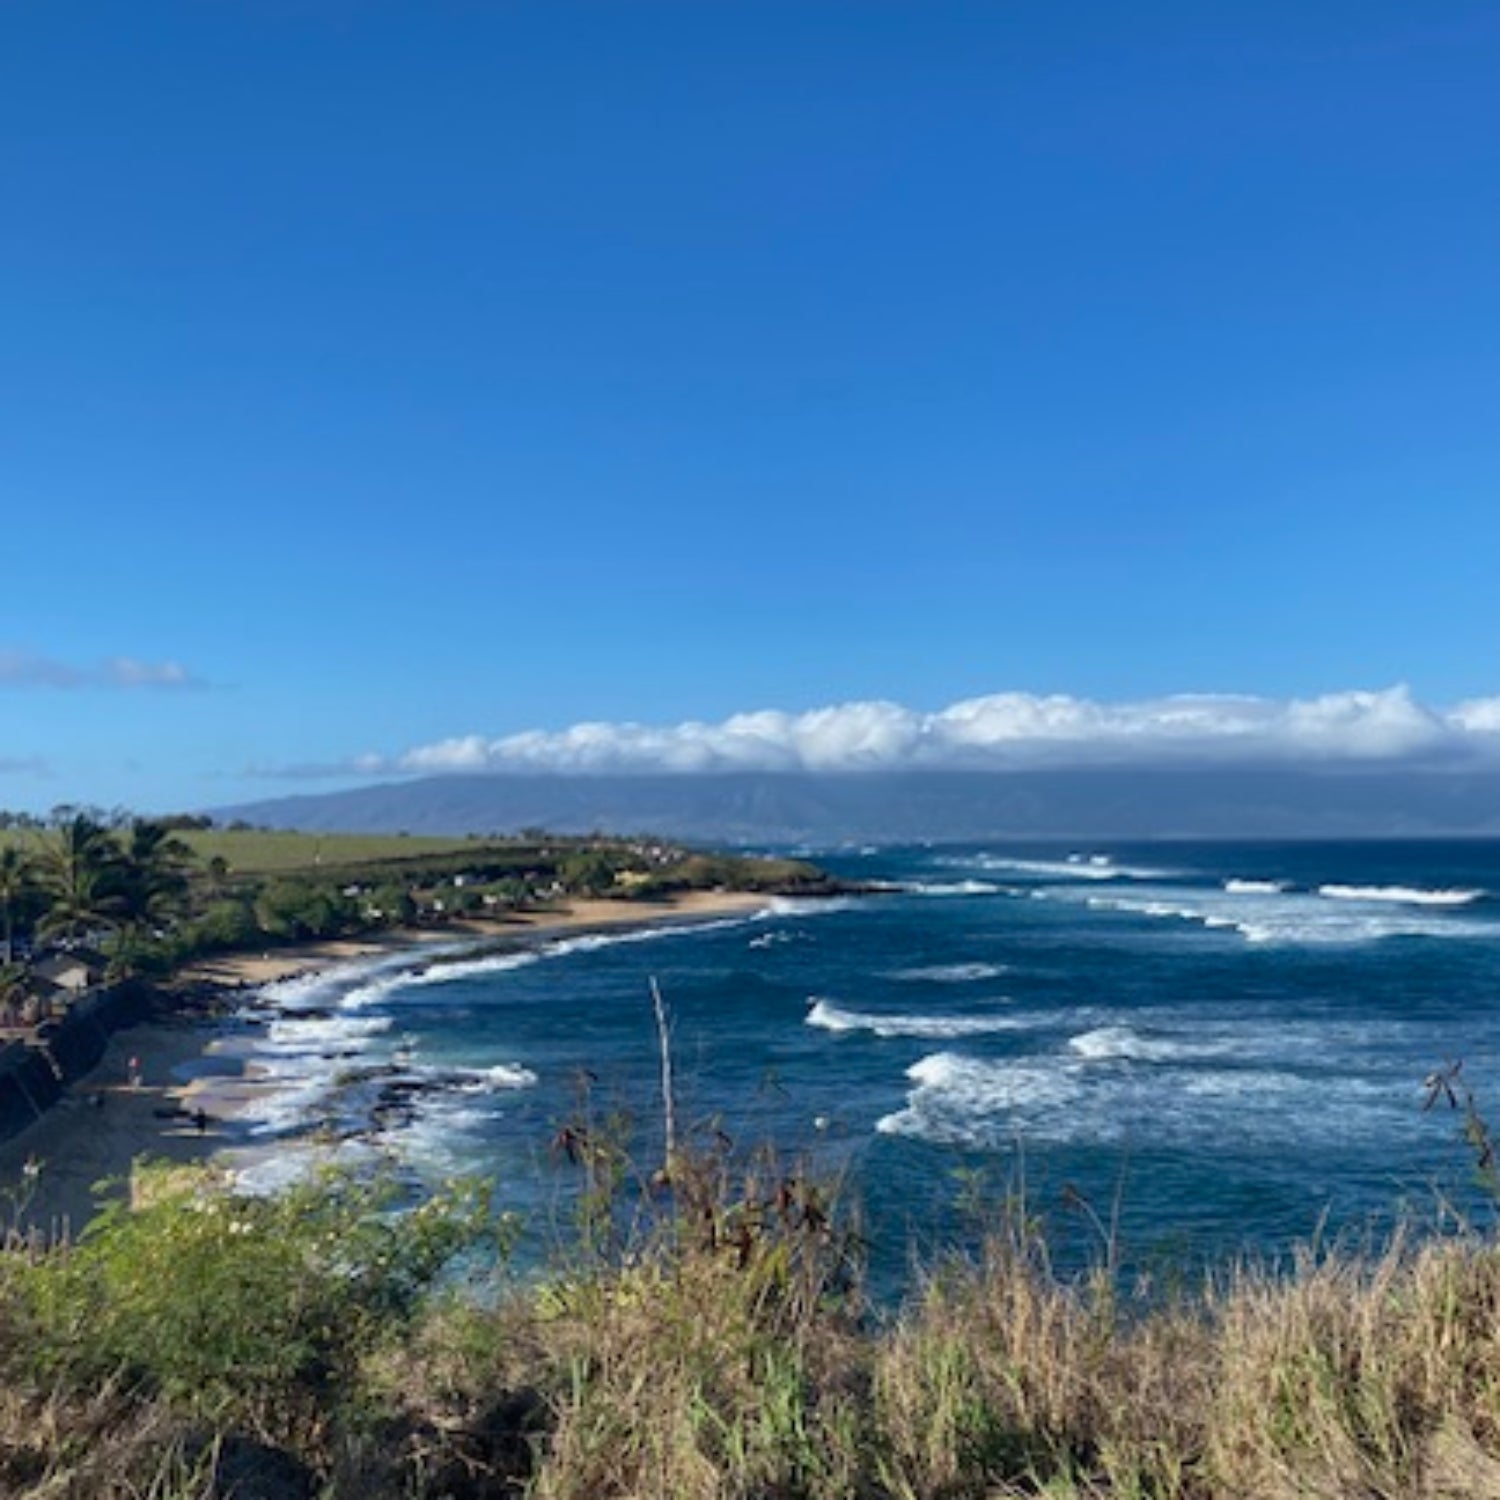 I've Got a Trip to Maui Planned. Should I Still Go?